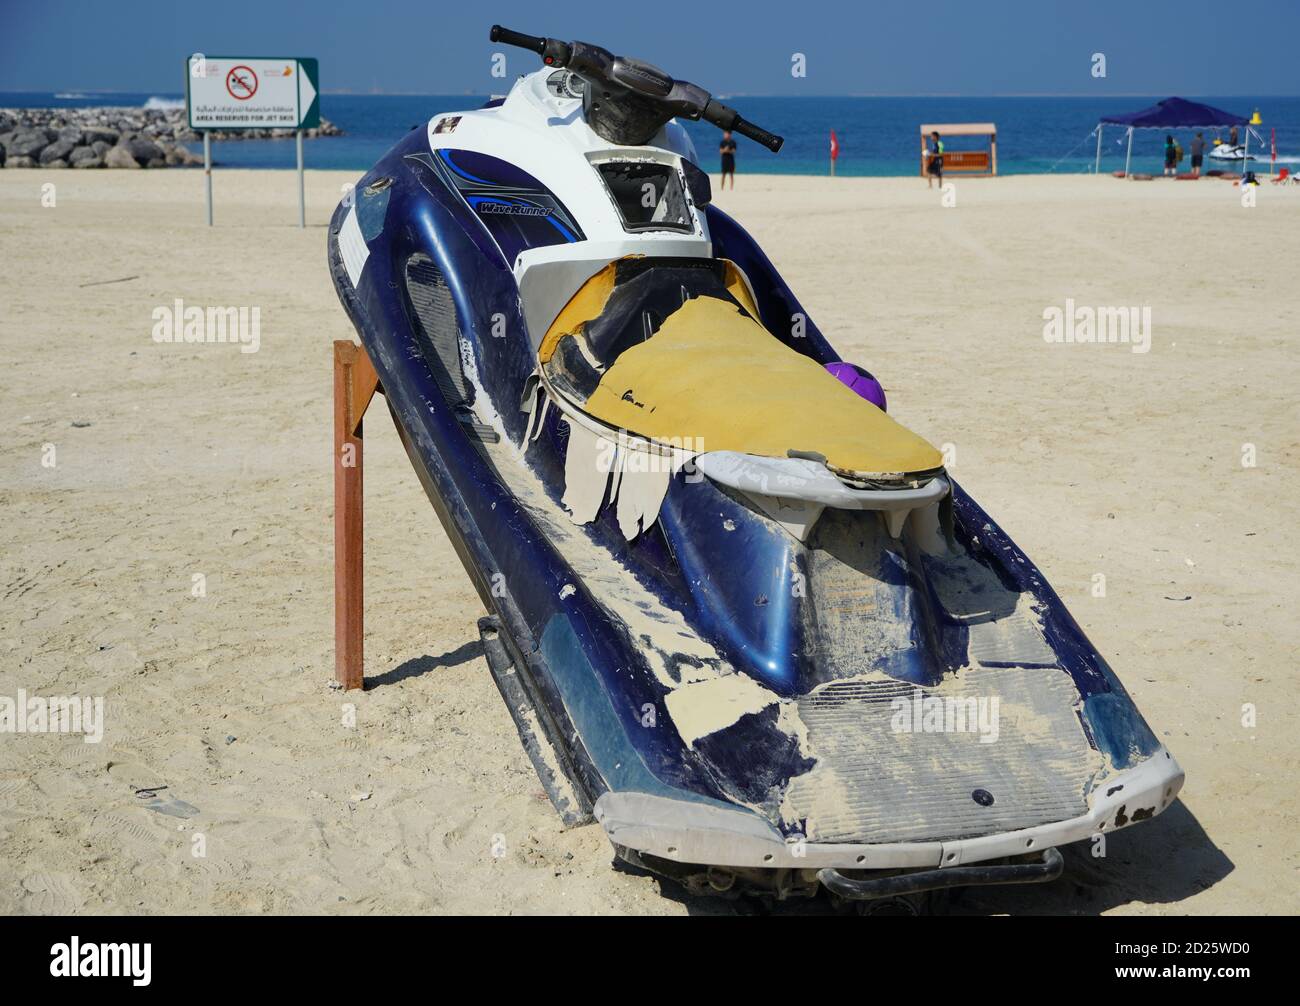 Dirty Old Jet Ski Parked On The Beach Of Holiday Season. Old Jet Skis On The Beach On Wooden Trailer. Blue And White Jet Ski - Dubai Uae January 2020 Stock Photo